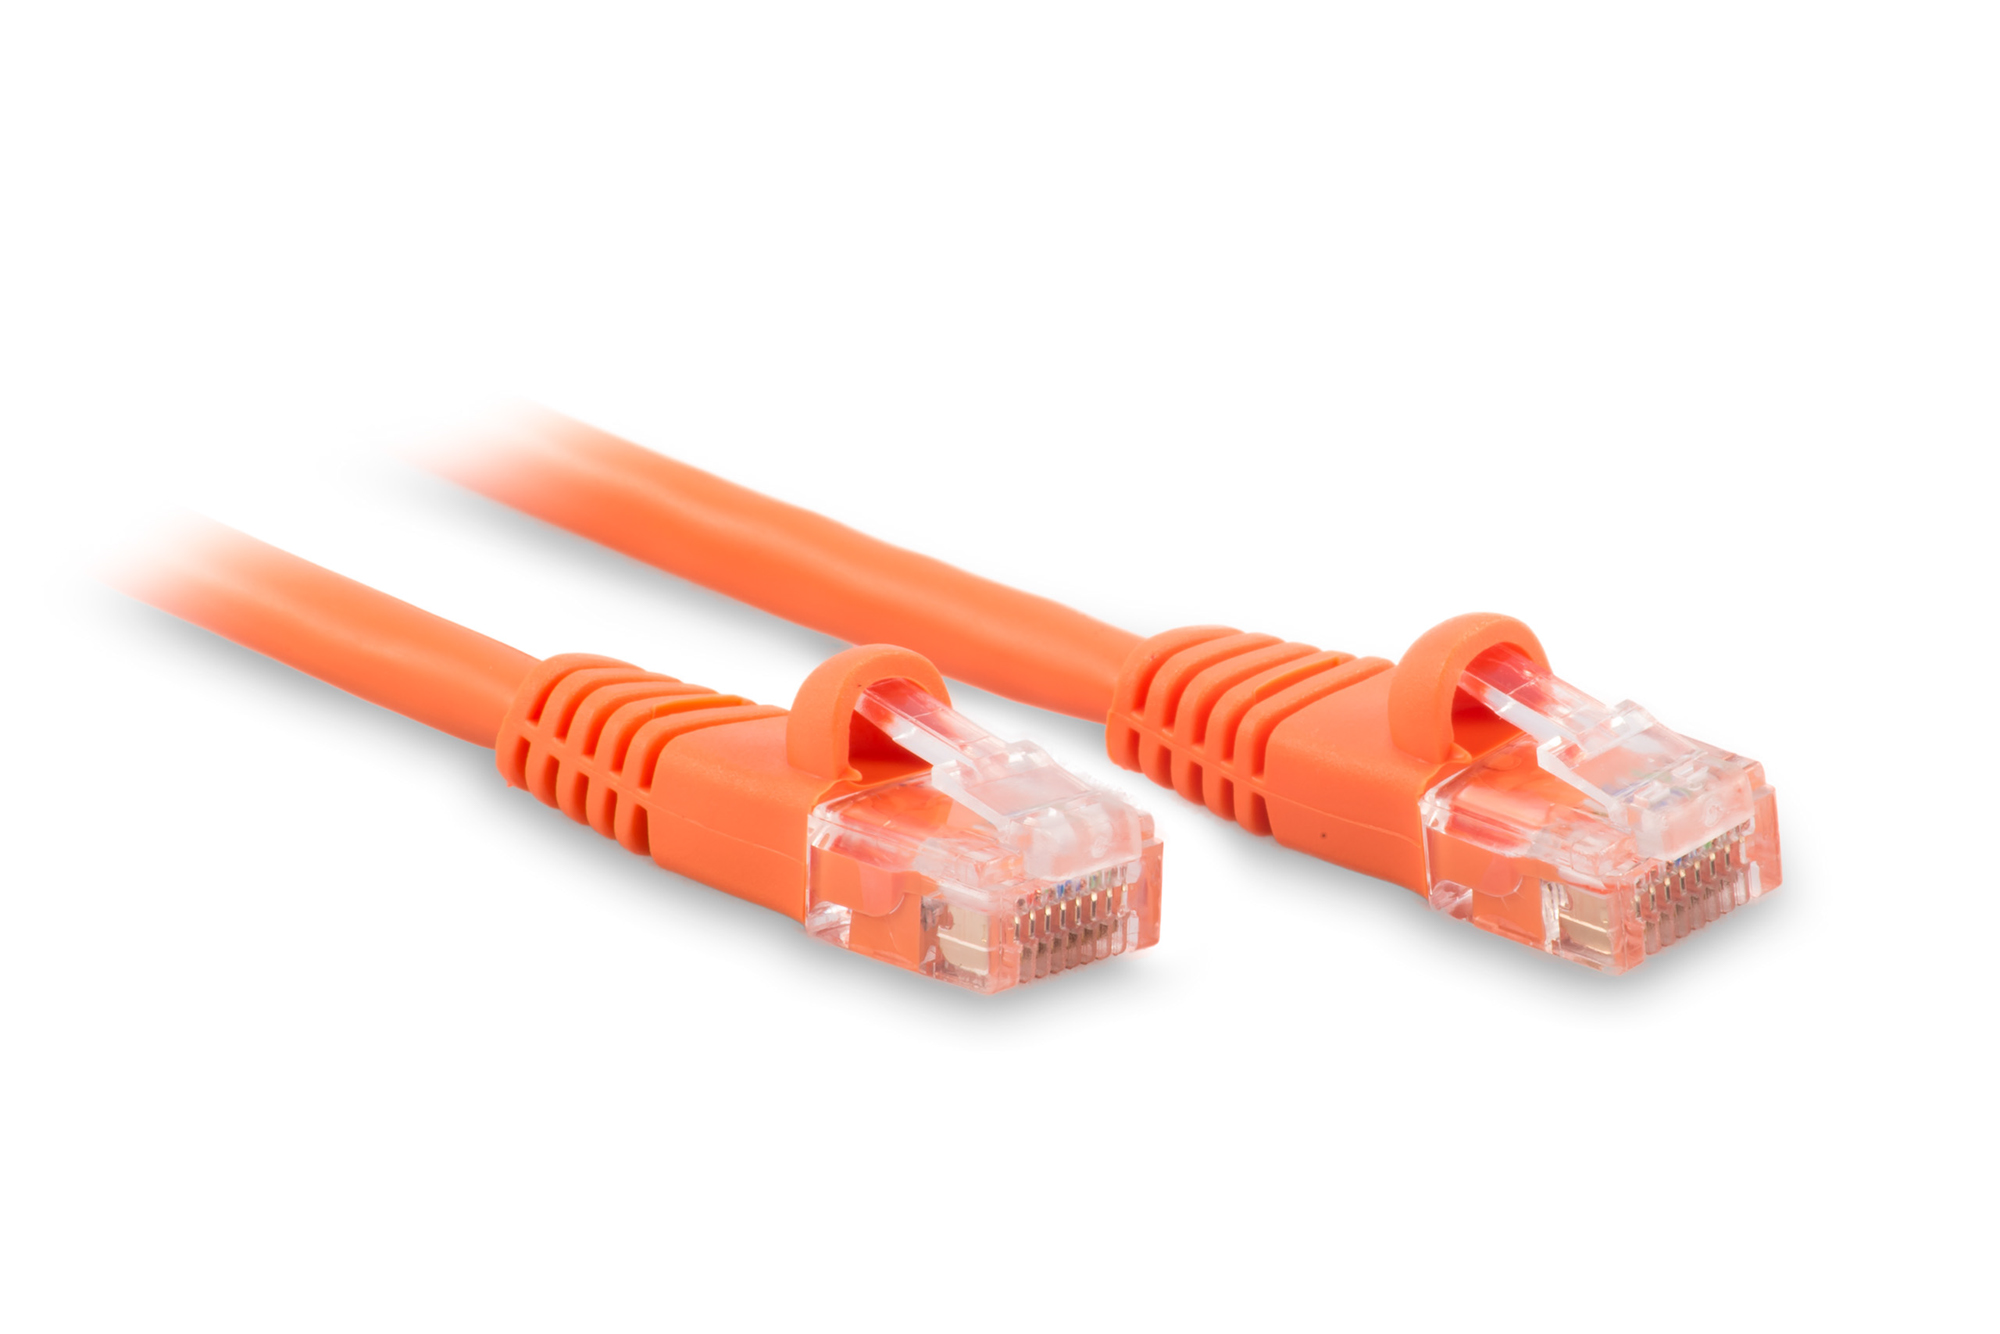 10ft Cat6 Ethernet Patch Cable - Orange Color - Snagless Boot, Stranded, RJ45, 550Mhz, 24AWG